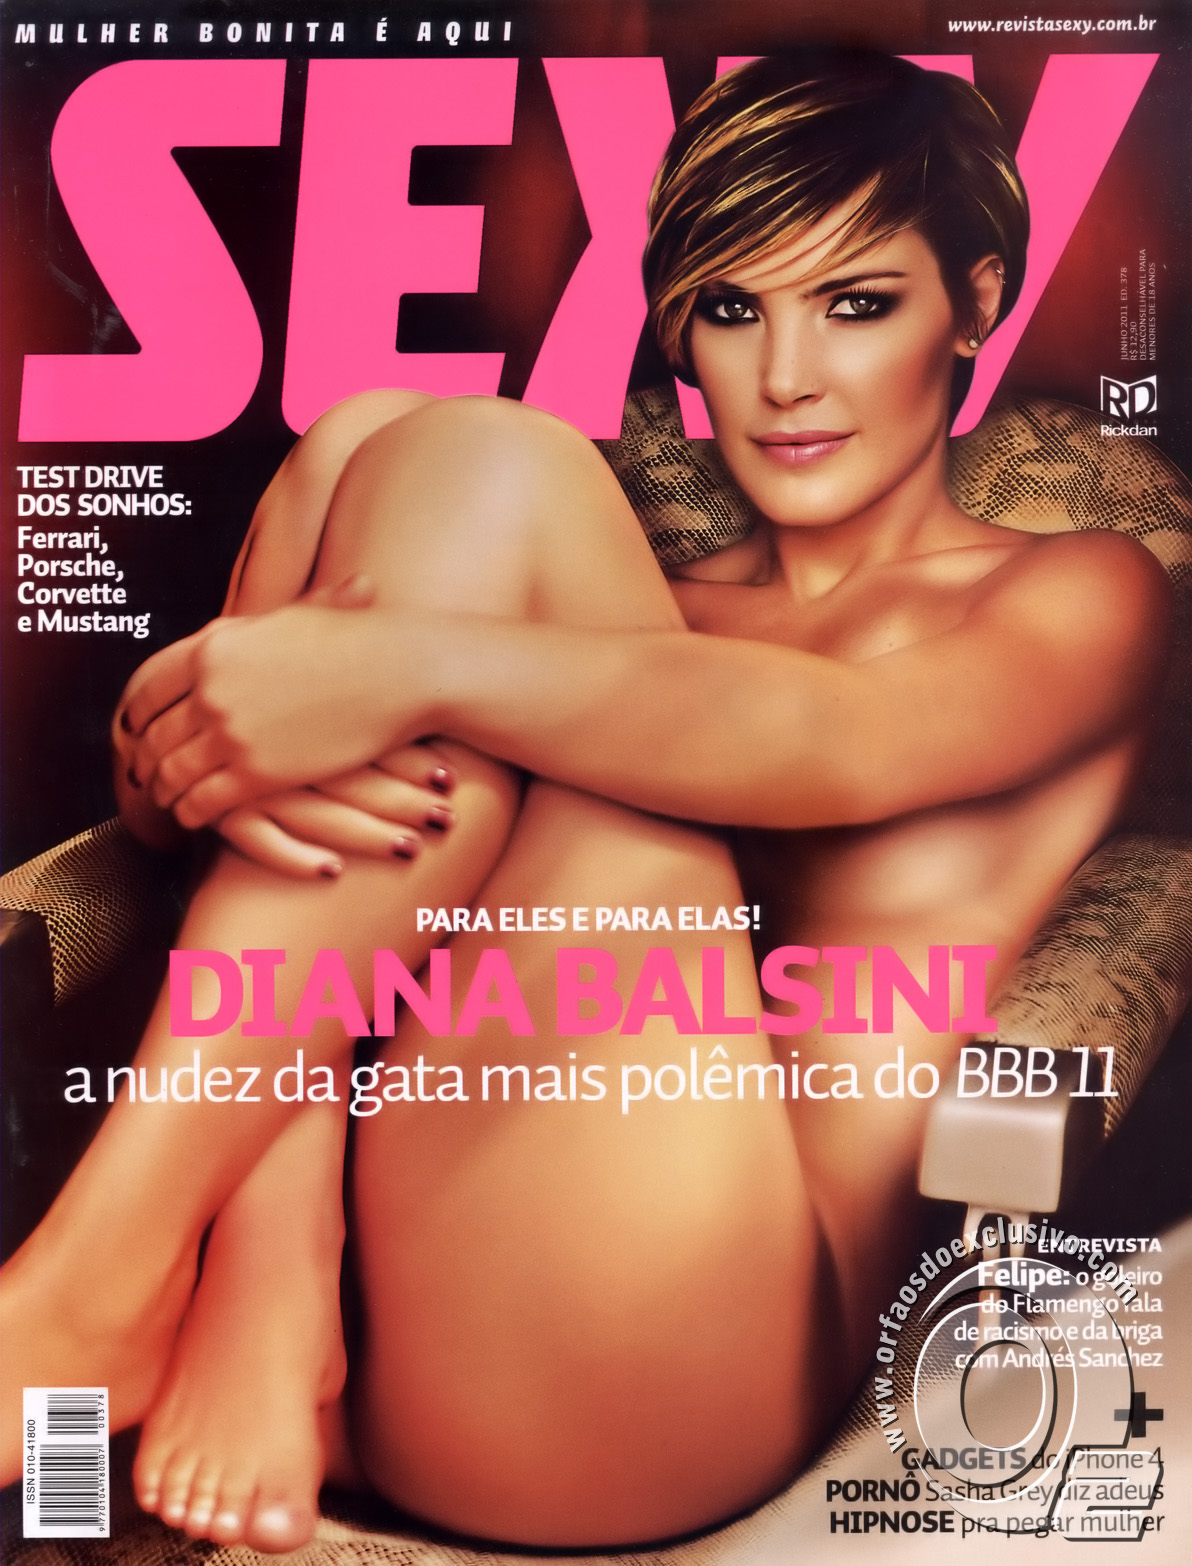 Diana Balsini naked in Sexy Magazine